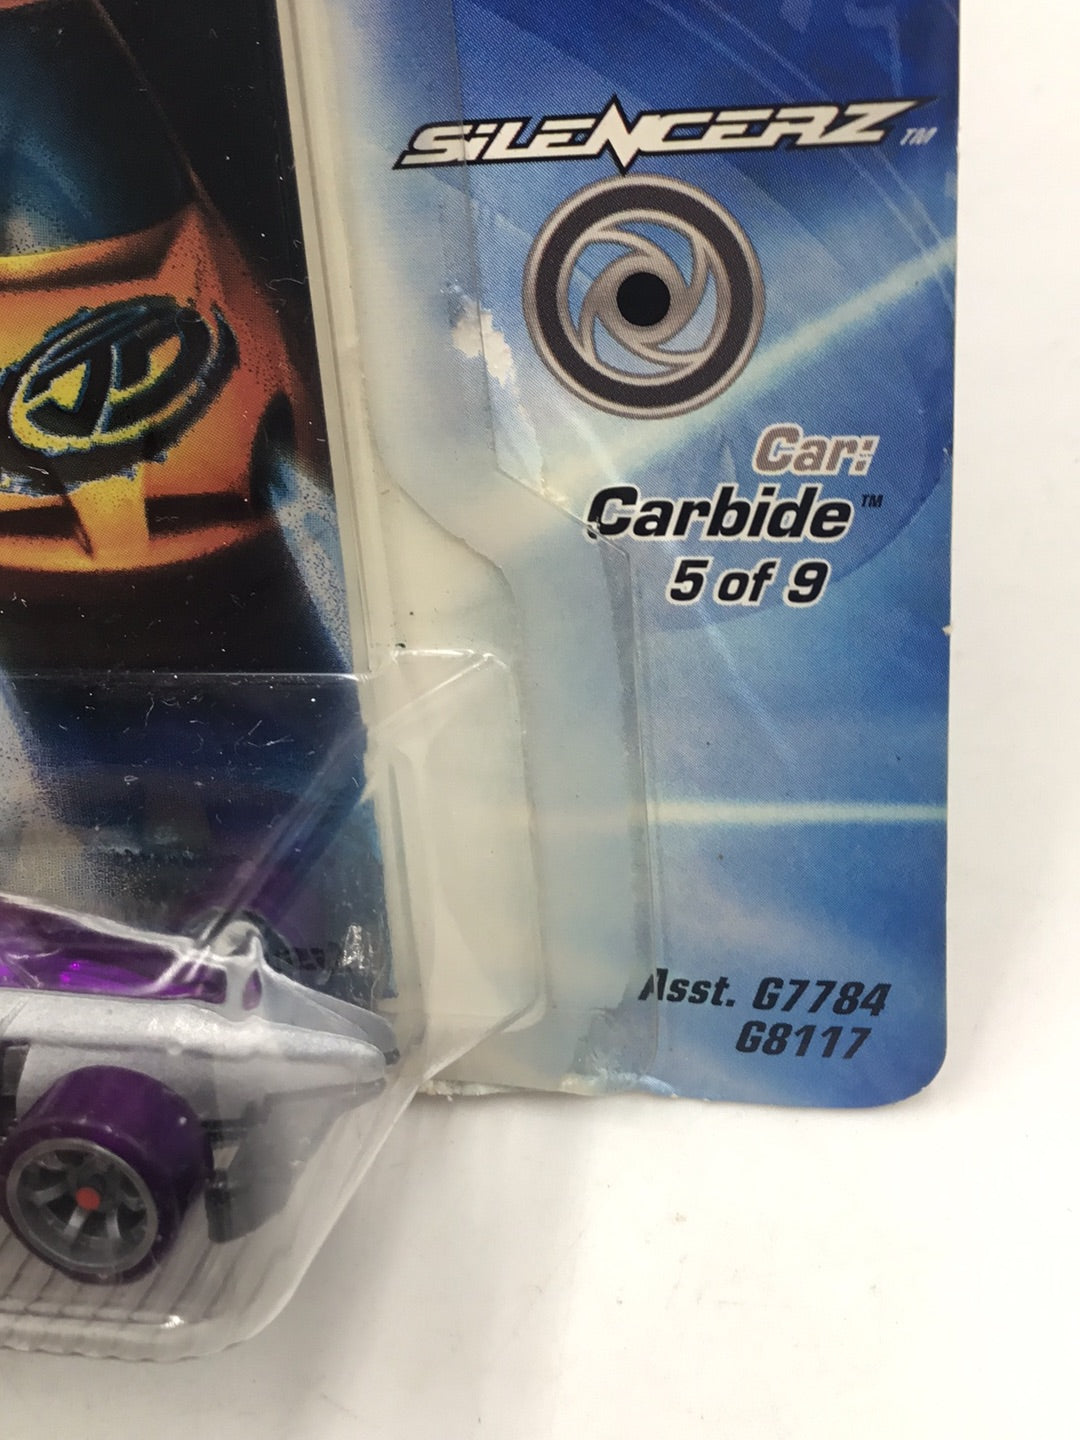 Hot wheels Acceleracers Silencerz Carbide 5 of 9 US card (Bad Card)